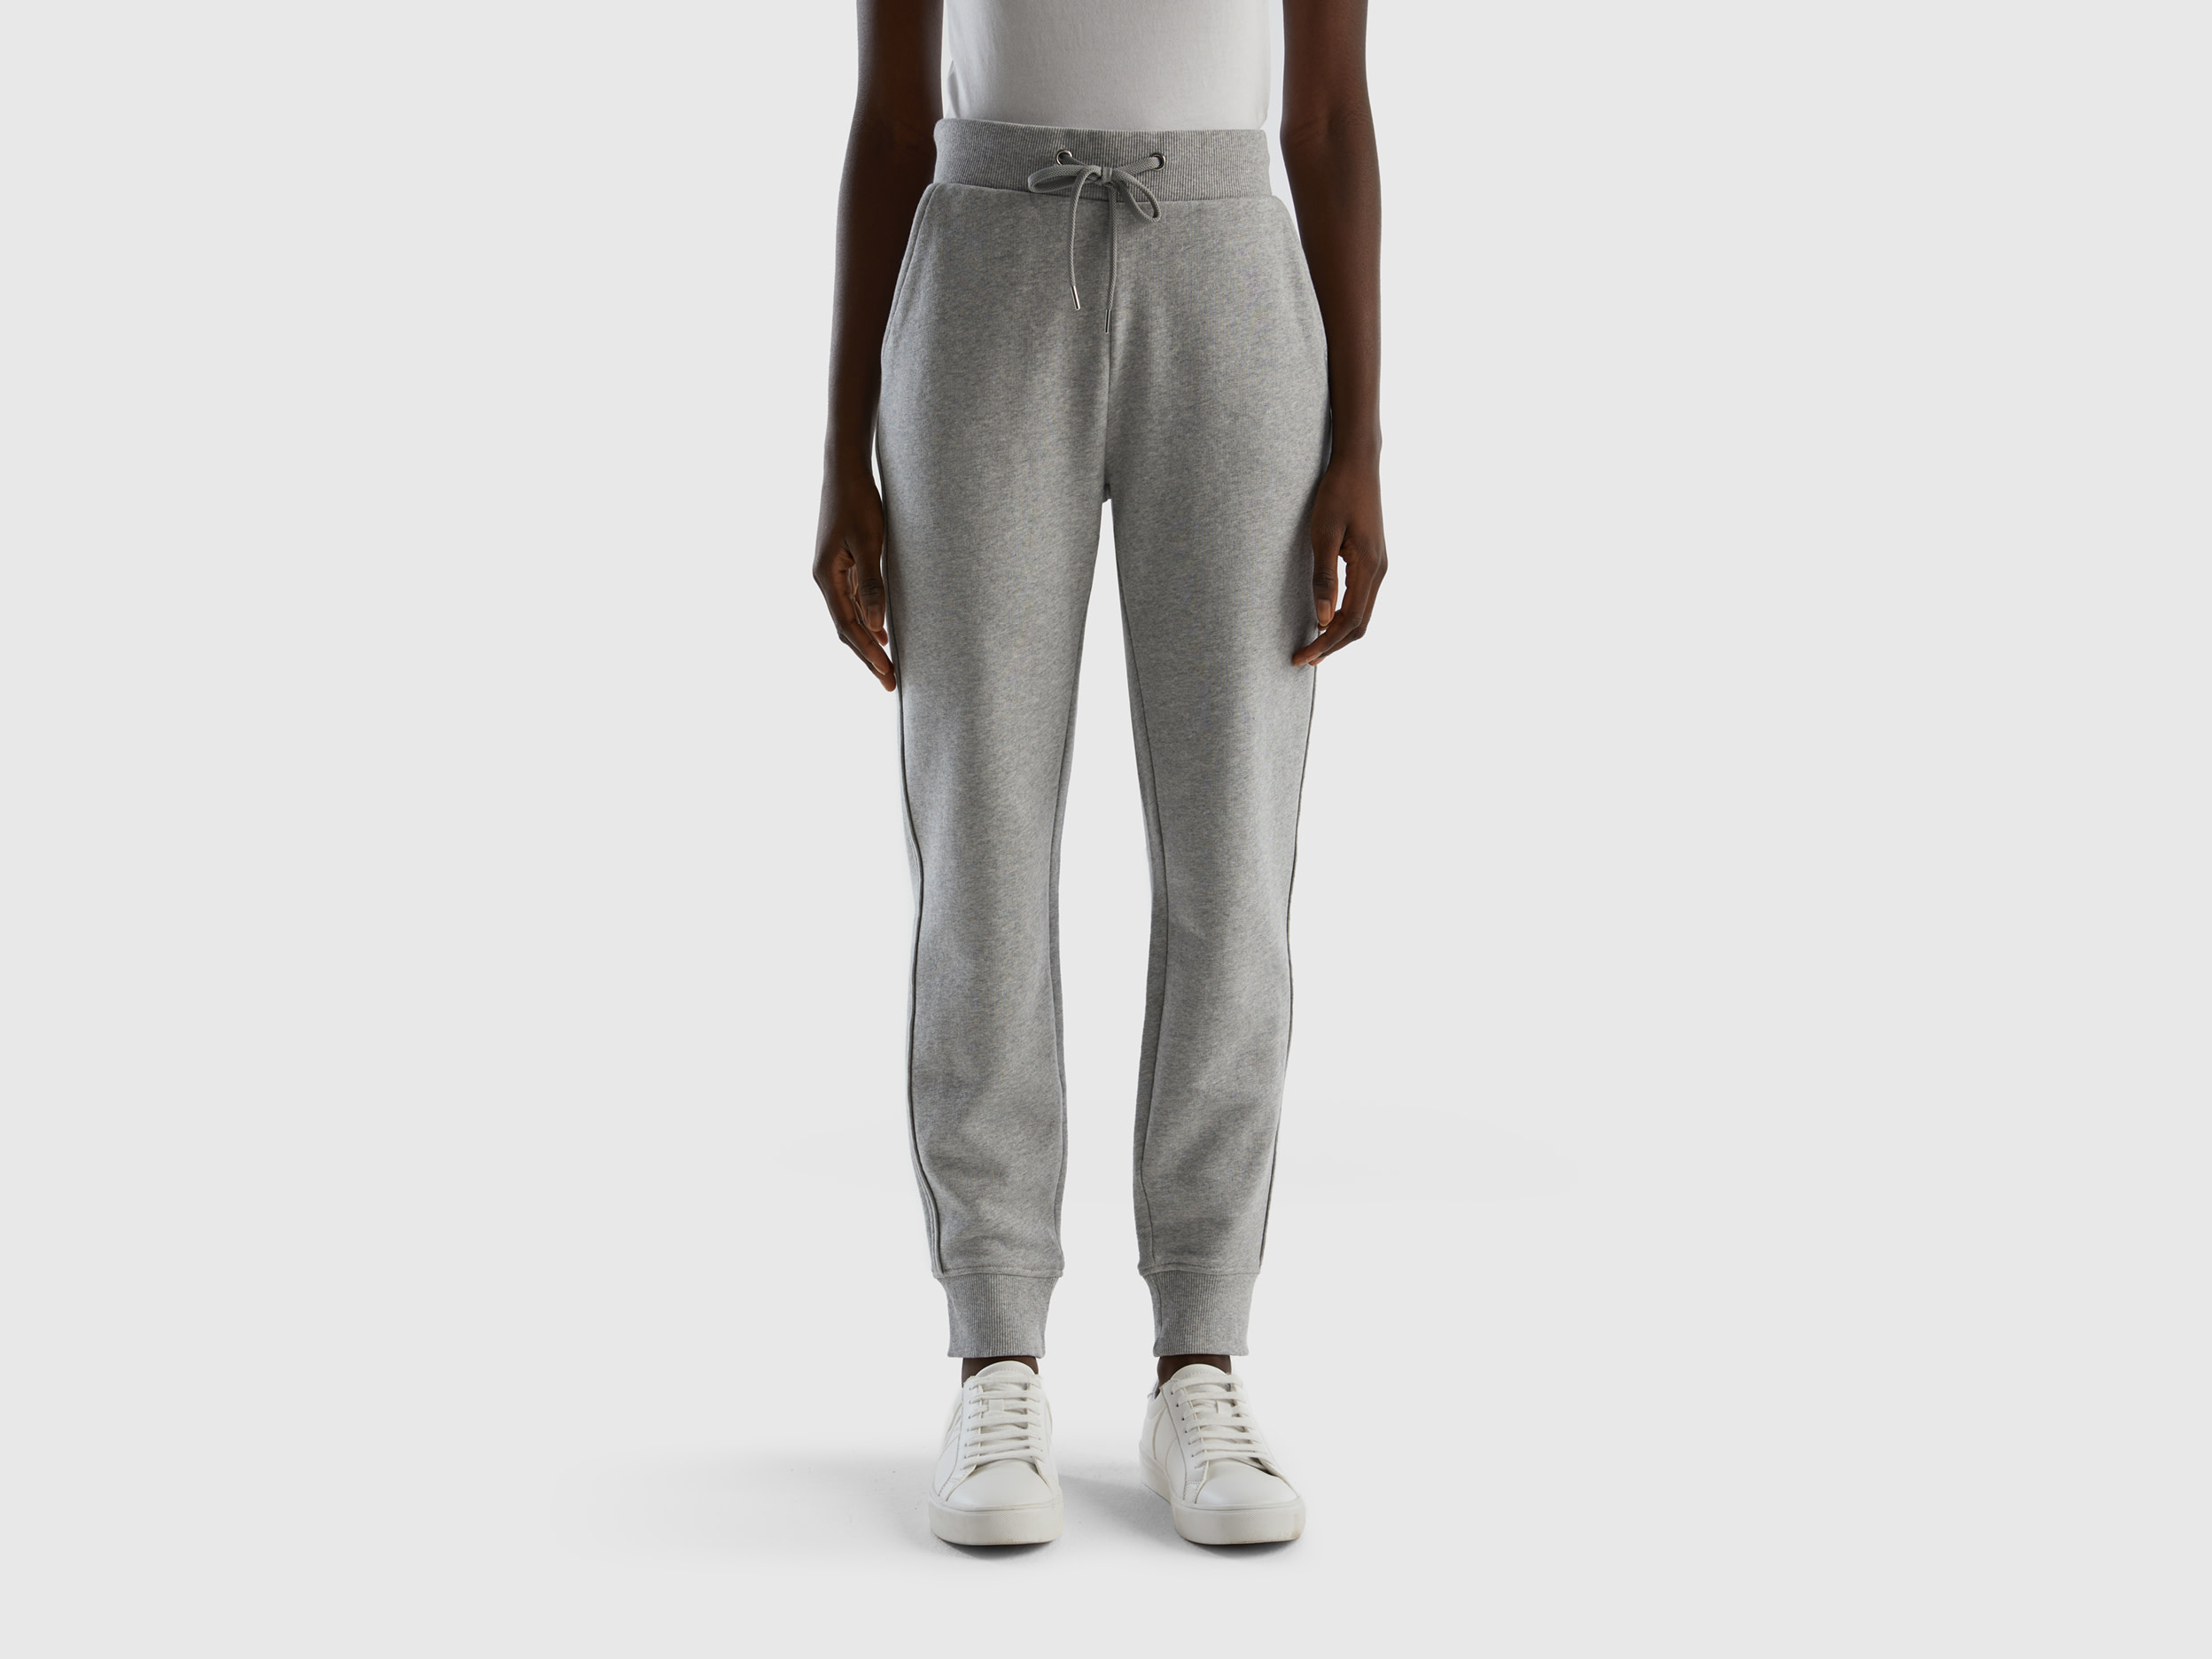 Benetton, Sweatpants With Drawstring, size L, Light Gray, Women